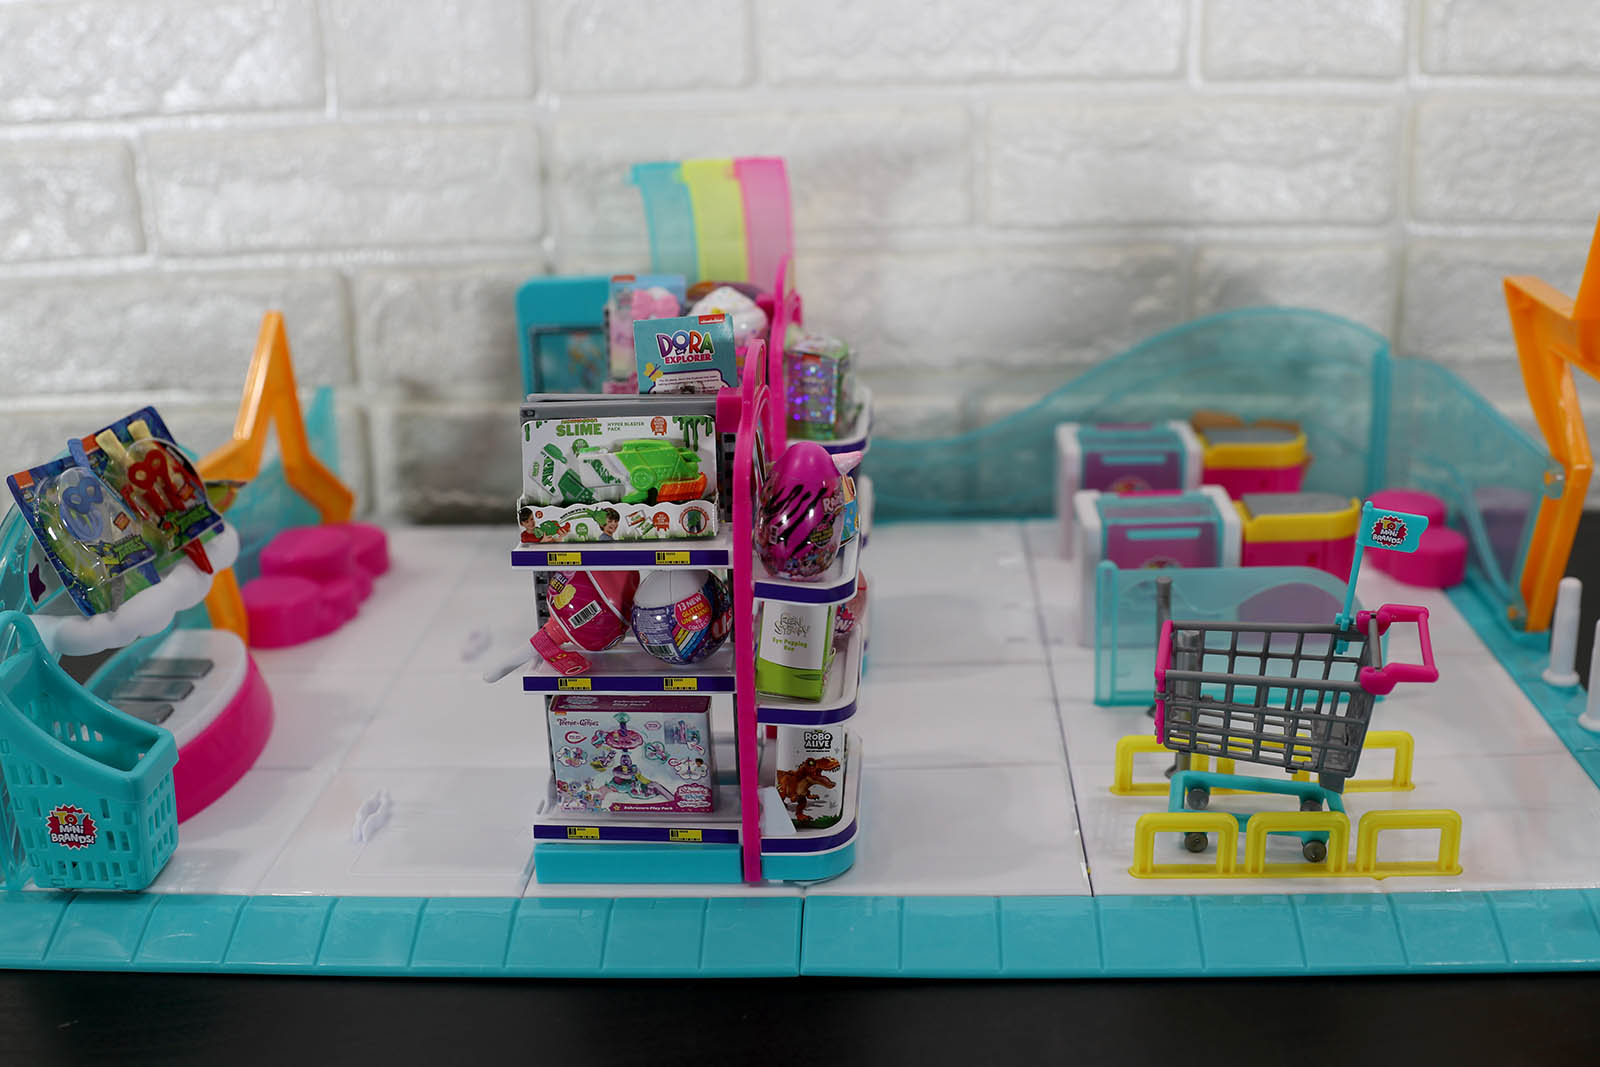 Unboxing and assembling Zuru 5 Surprise Toy Mini Brands Mini Toy